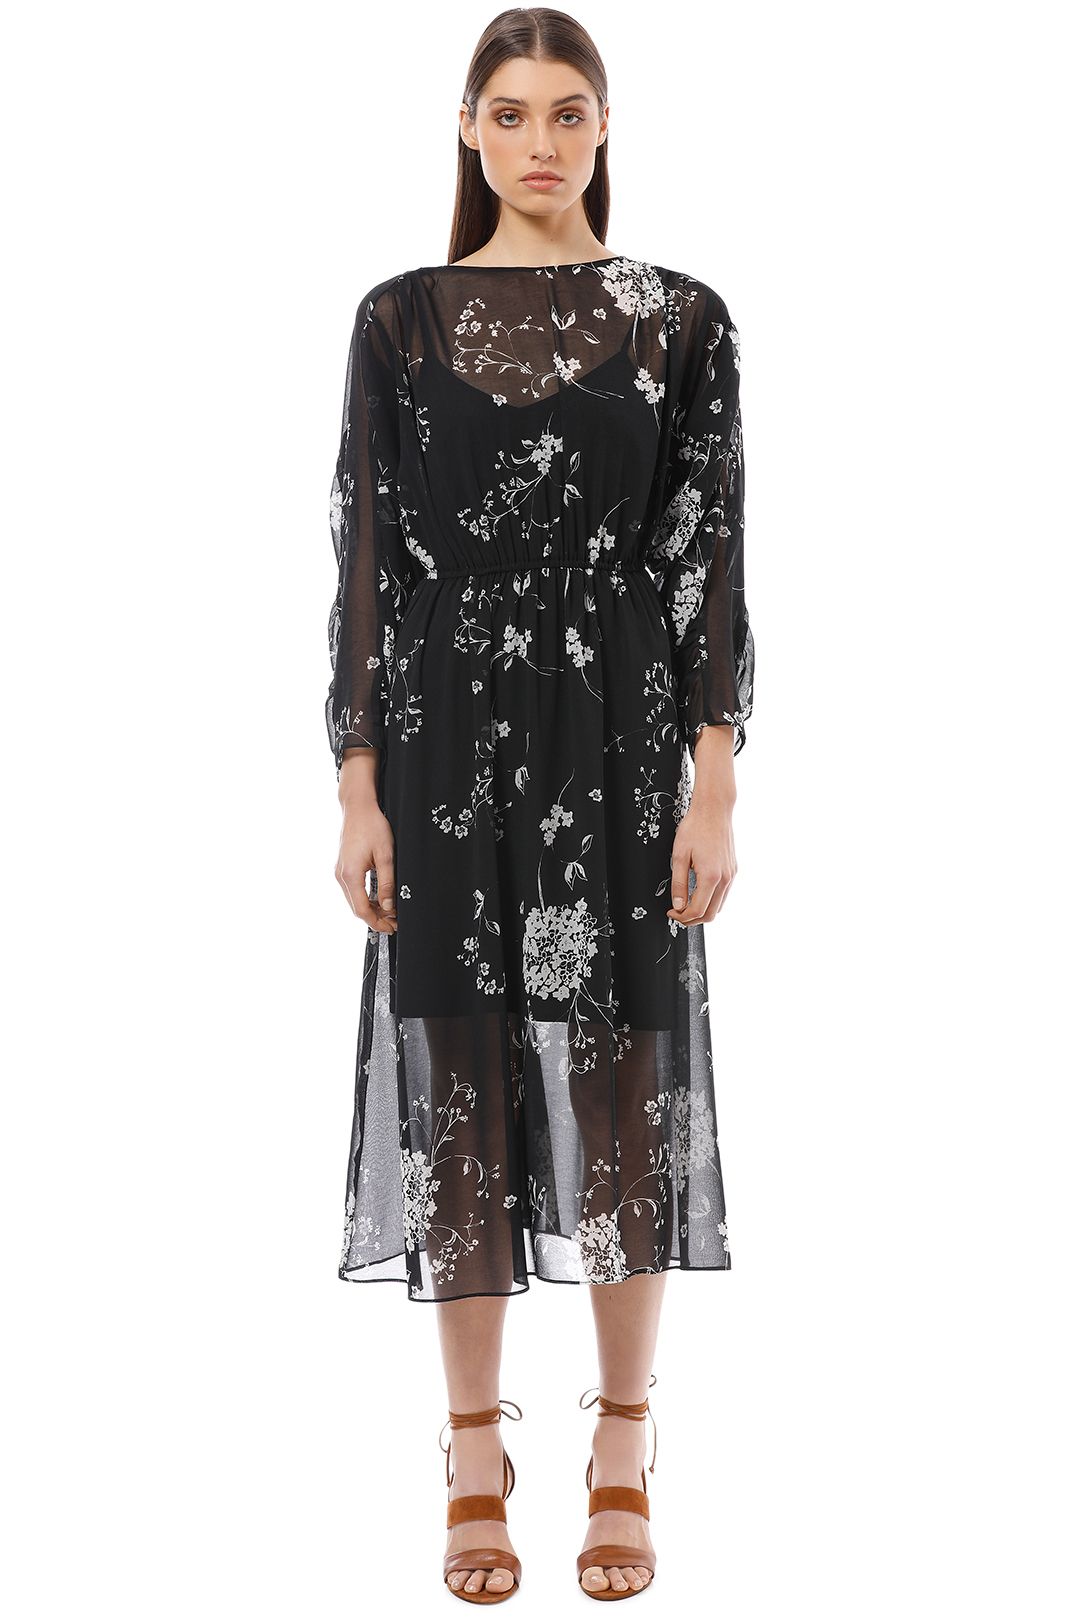 Veronika Maine - Monotone Floral Gathered Midi Dress - Black - Front